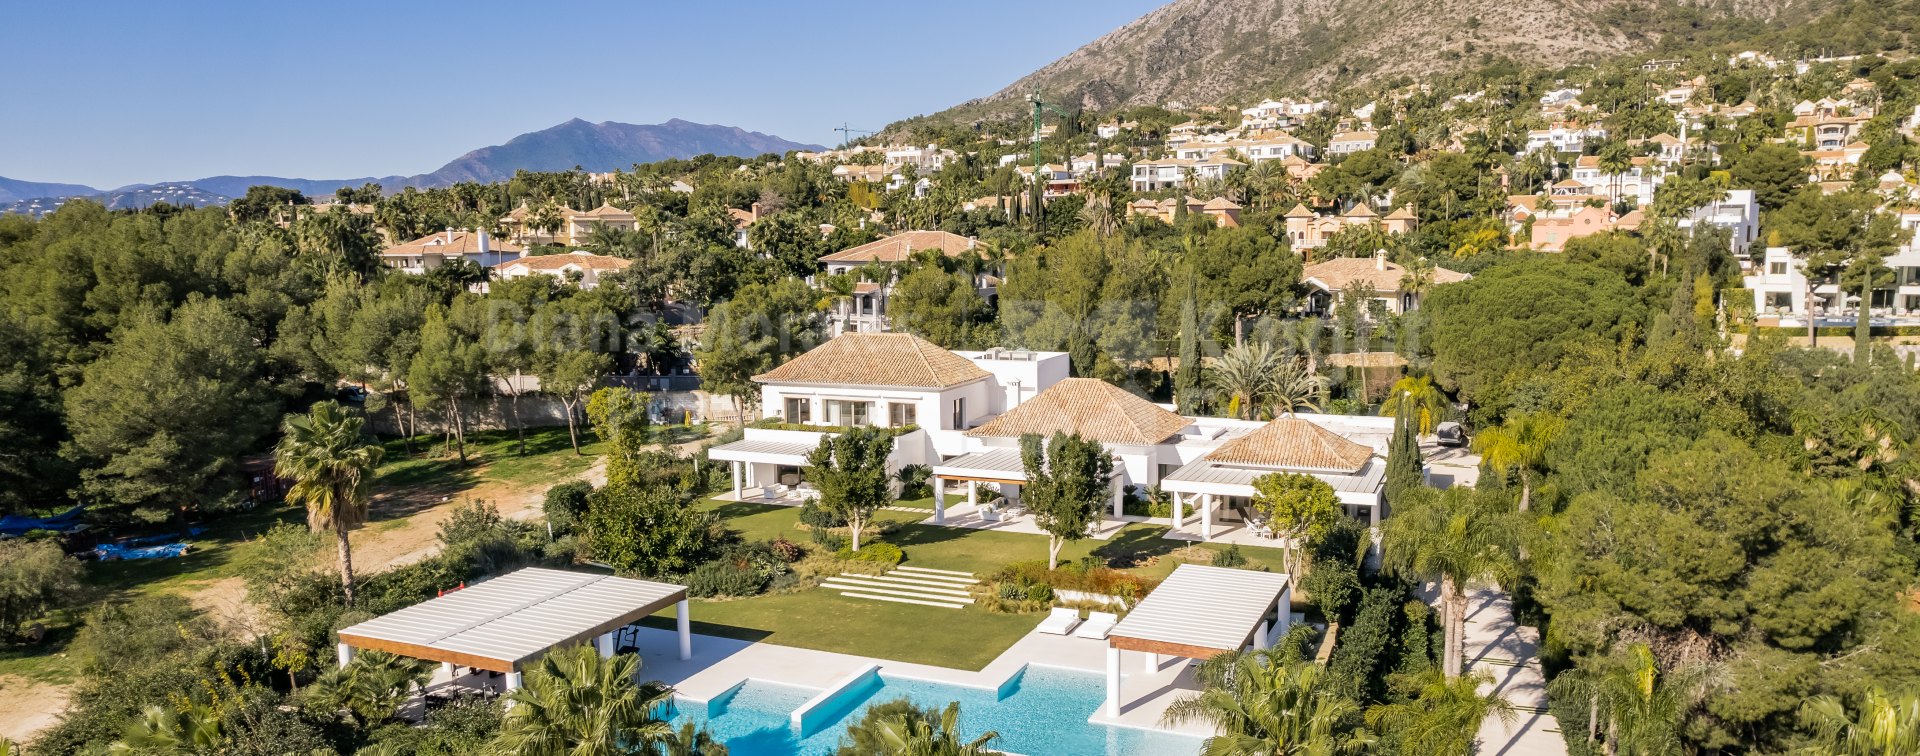 La Quinta de Sierra Blanca, Perfect location for a villa in gated community